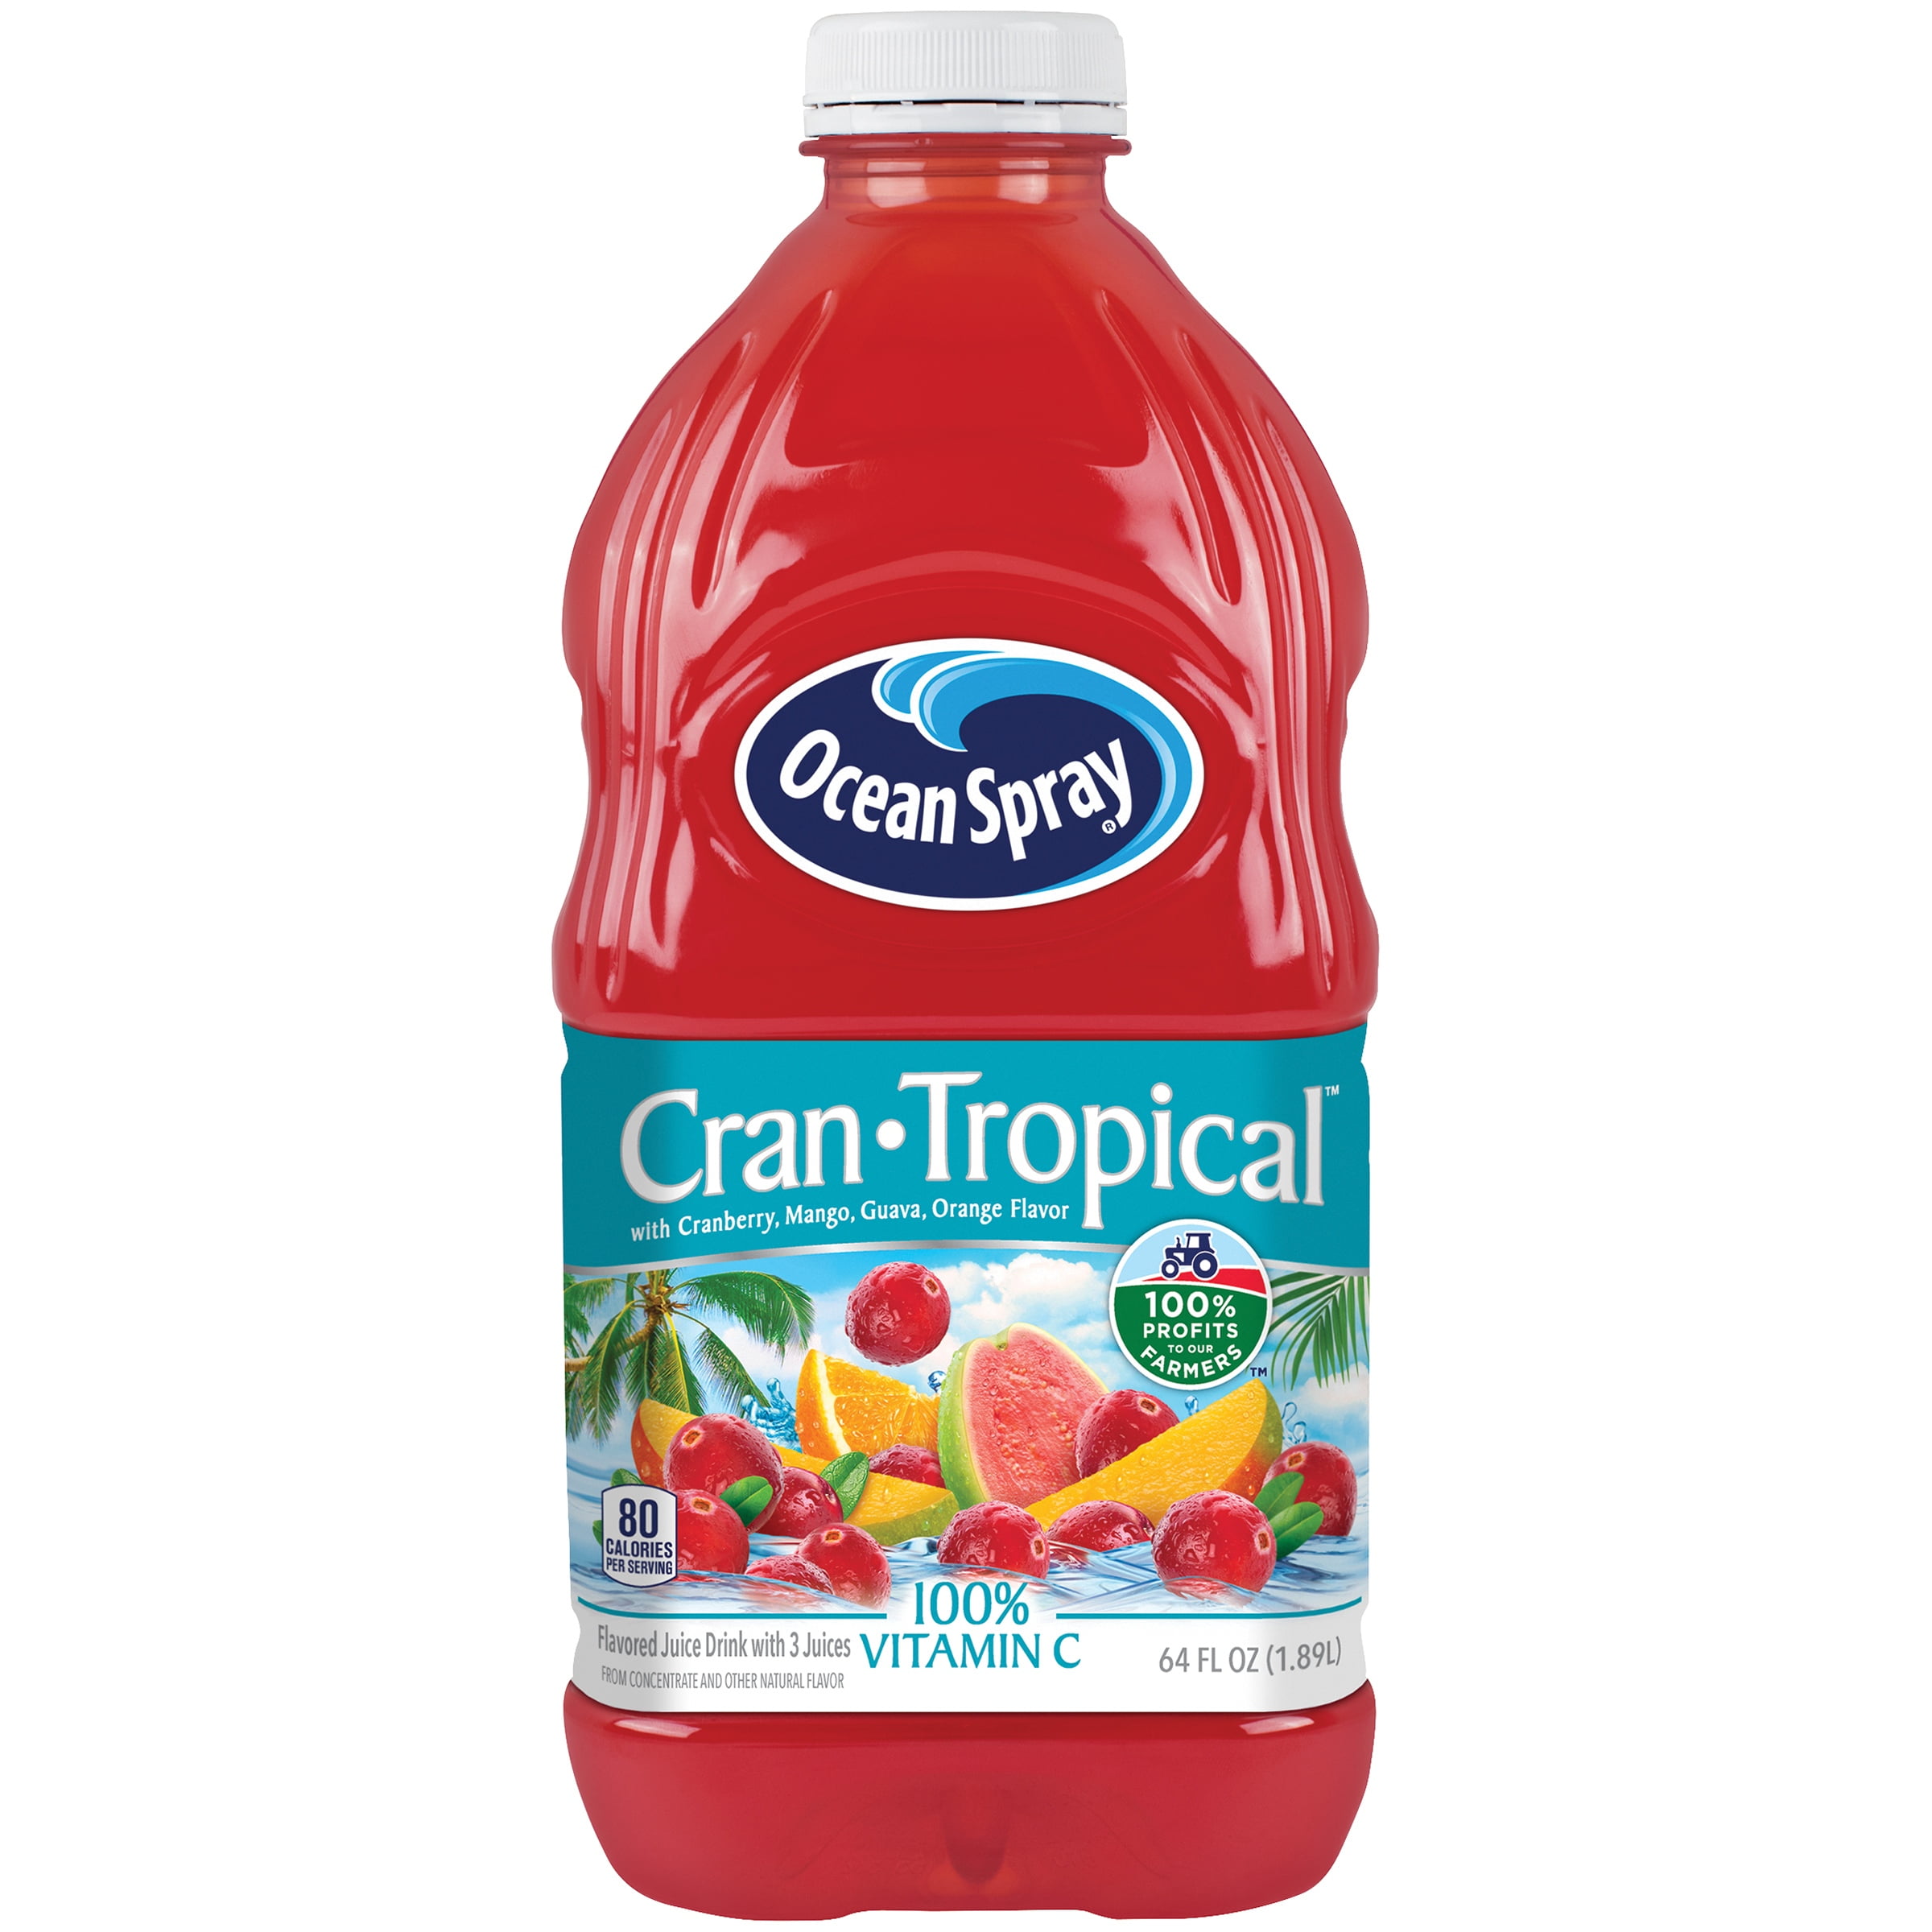 Cranberry Tropical Juice Drink